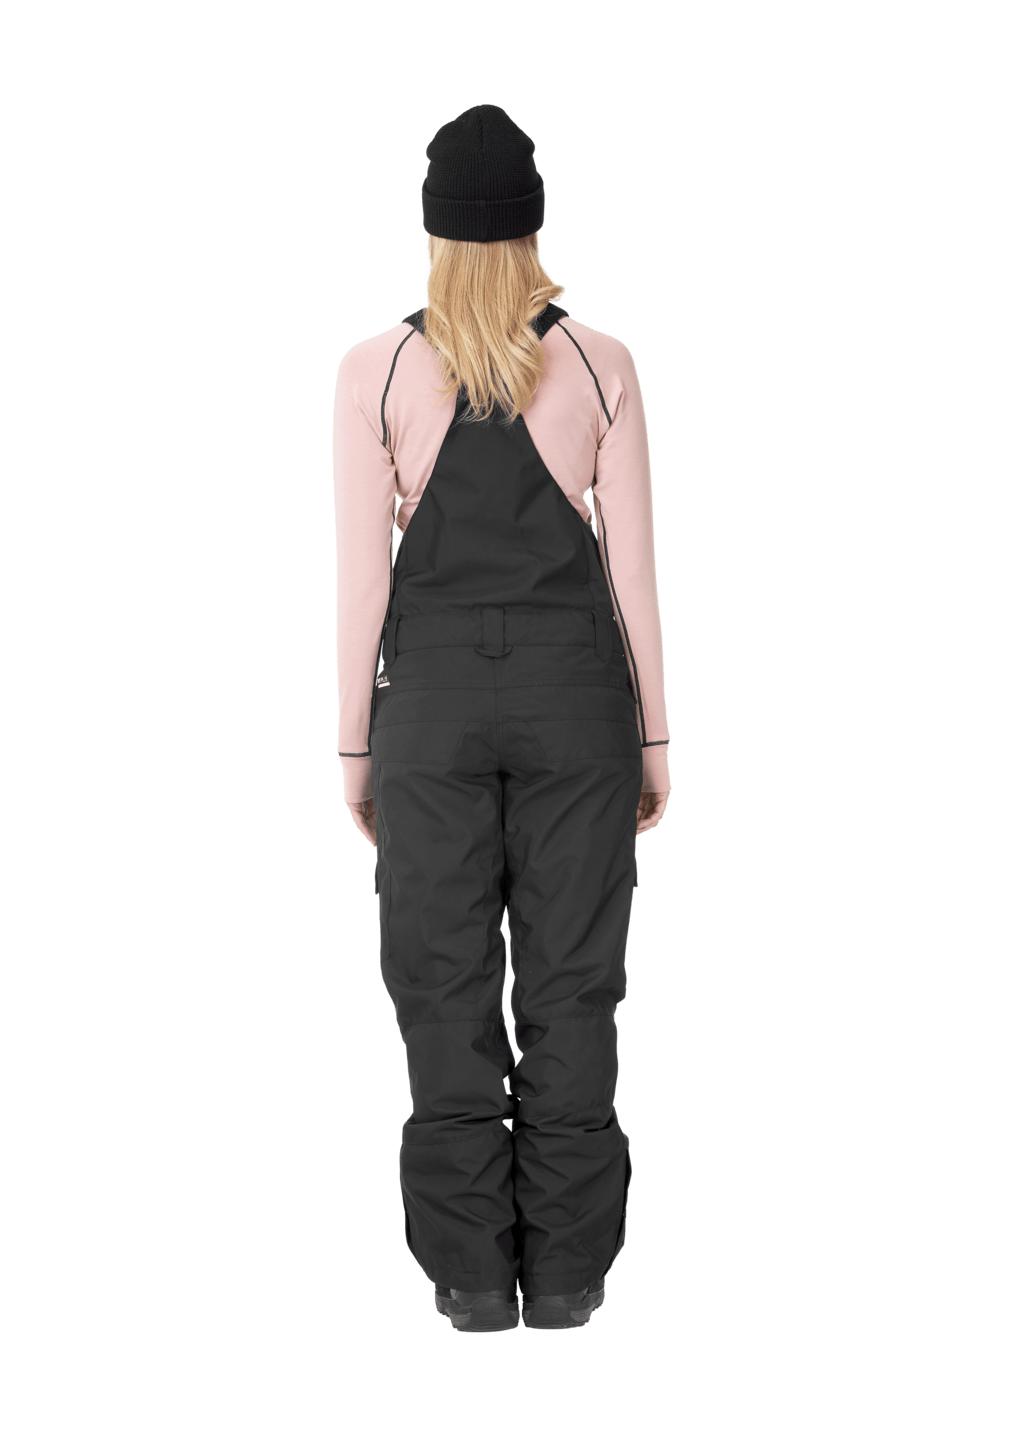 Picture Womens Salopettes/Ski Trousers - Brita Bib